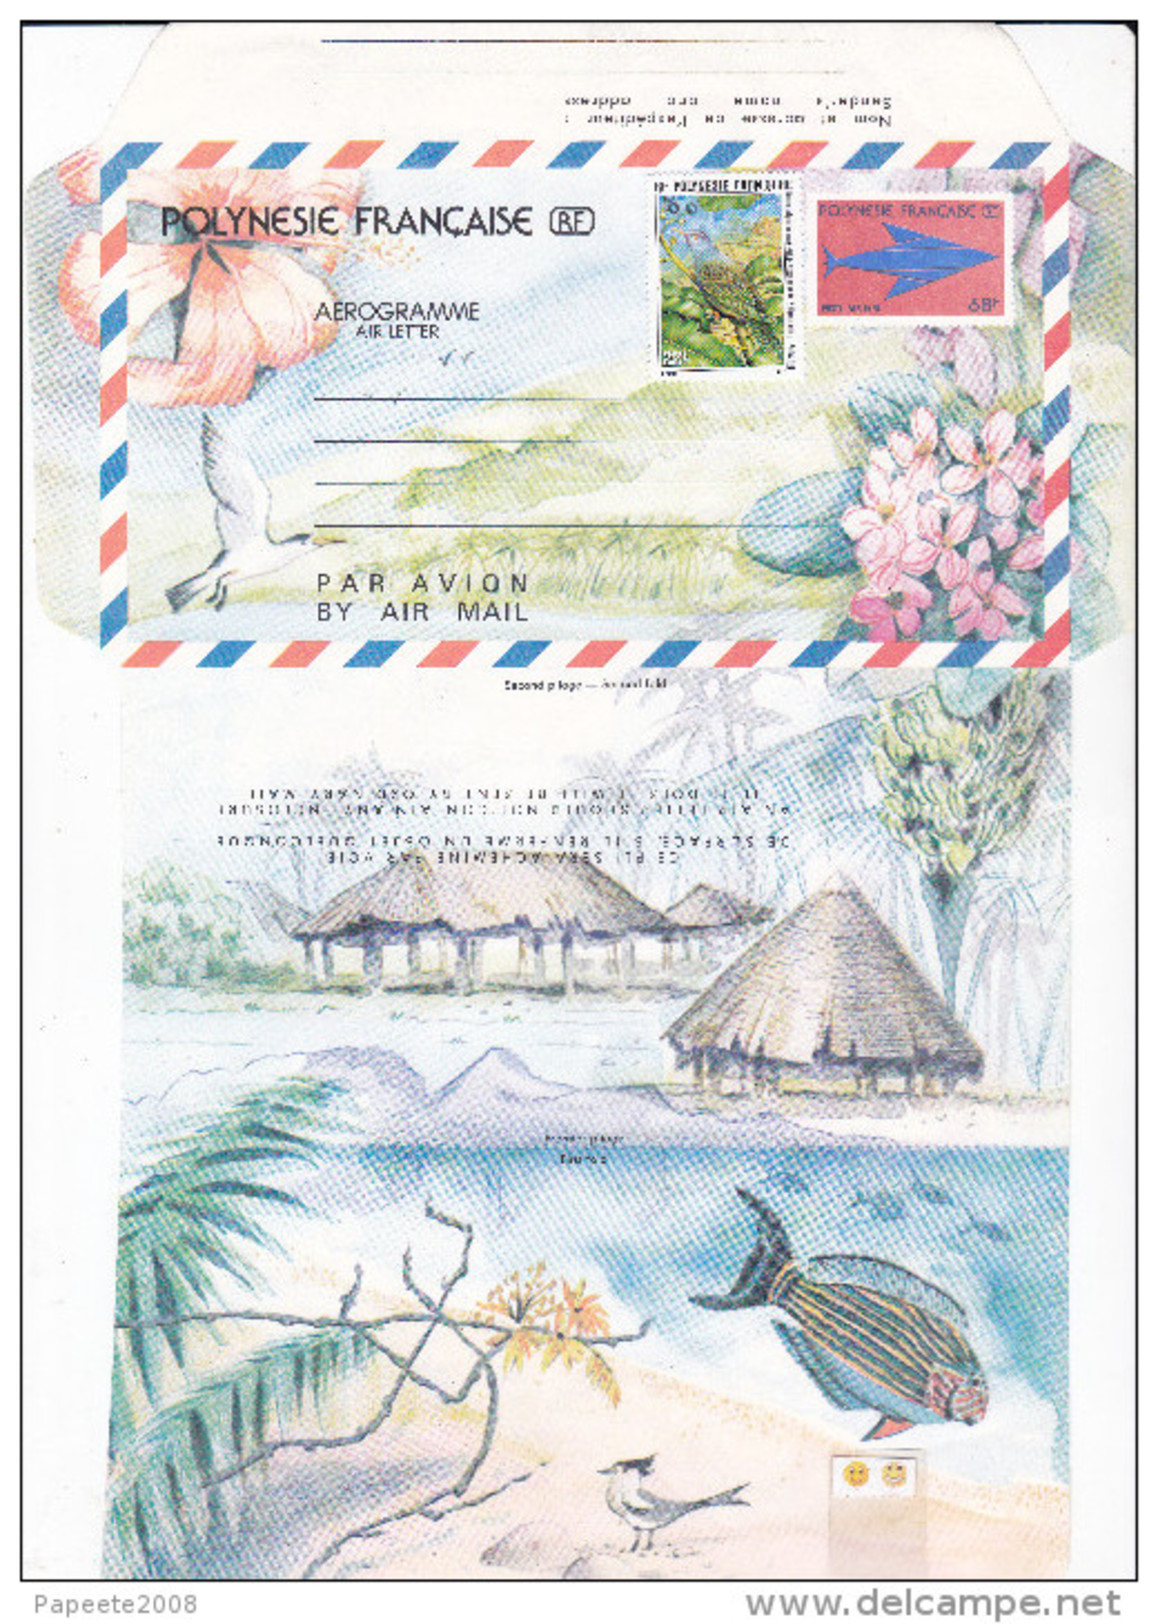 Polynesie Française / Tahiti - Aérogramme à 68 F CFP - 1988 - Neuf / Surchargé à 100 F - Luchtpostbladen